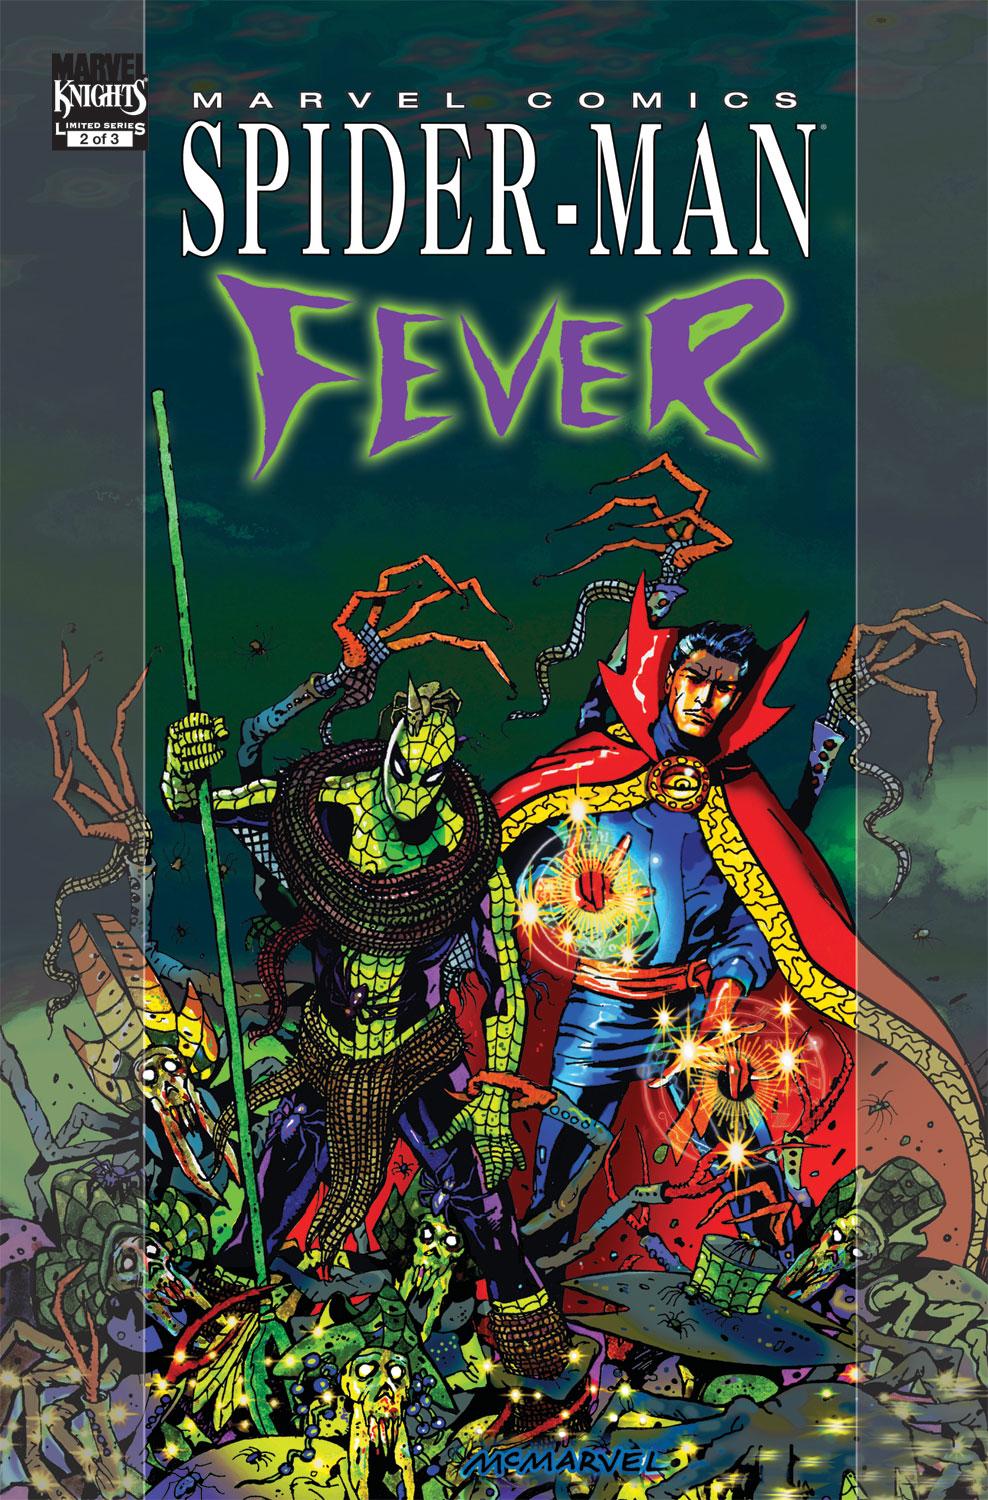 Spider-Man: Fever (2010) #2